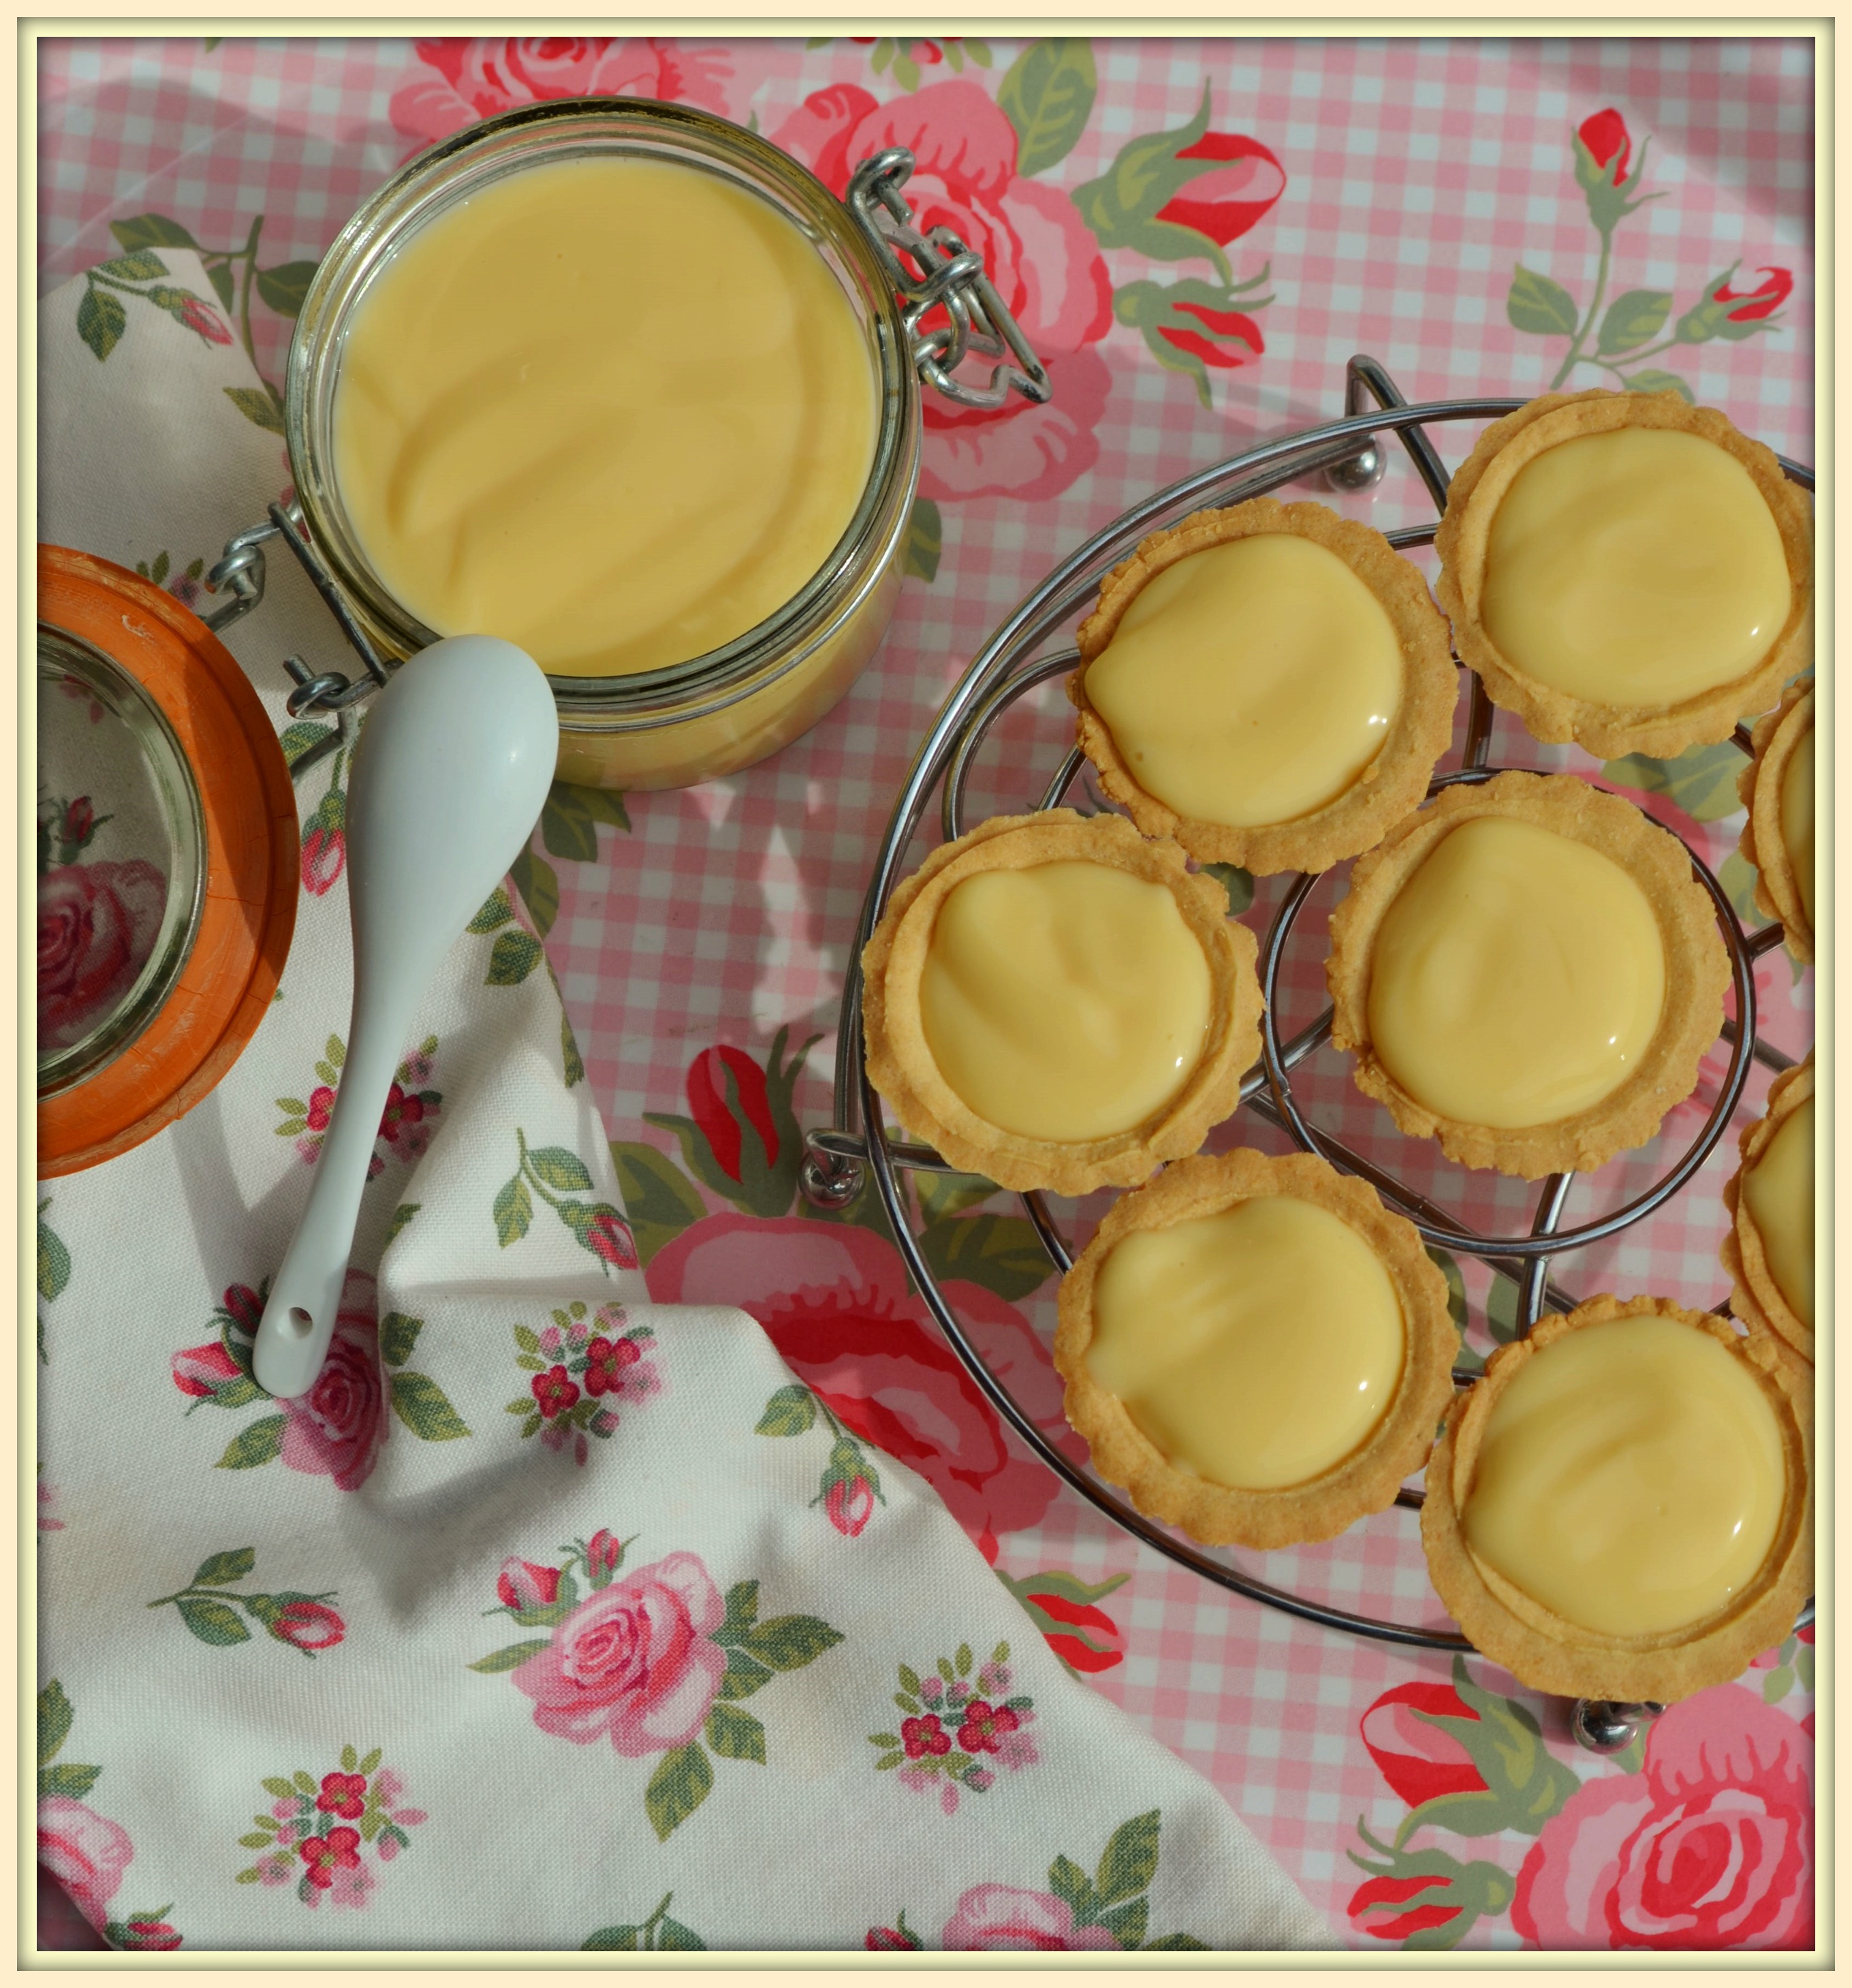 Mini tarts with lemon curd and ambrosia pudding!